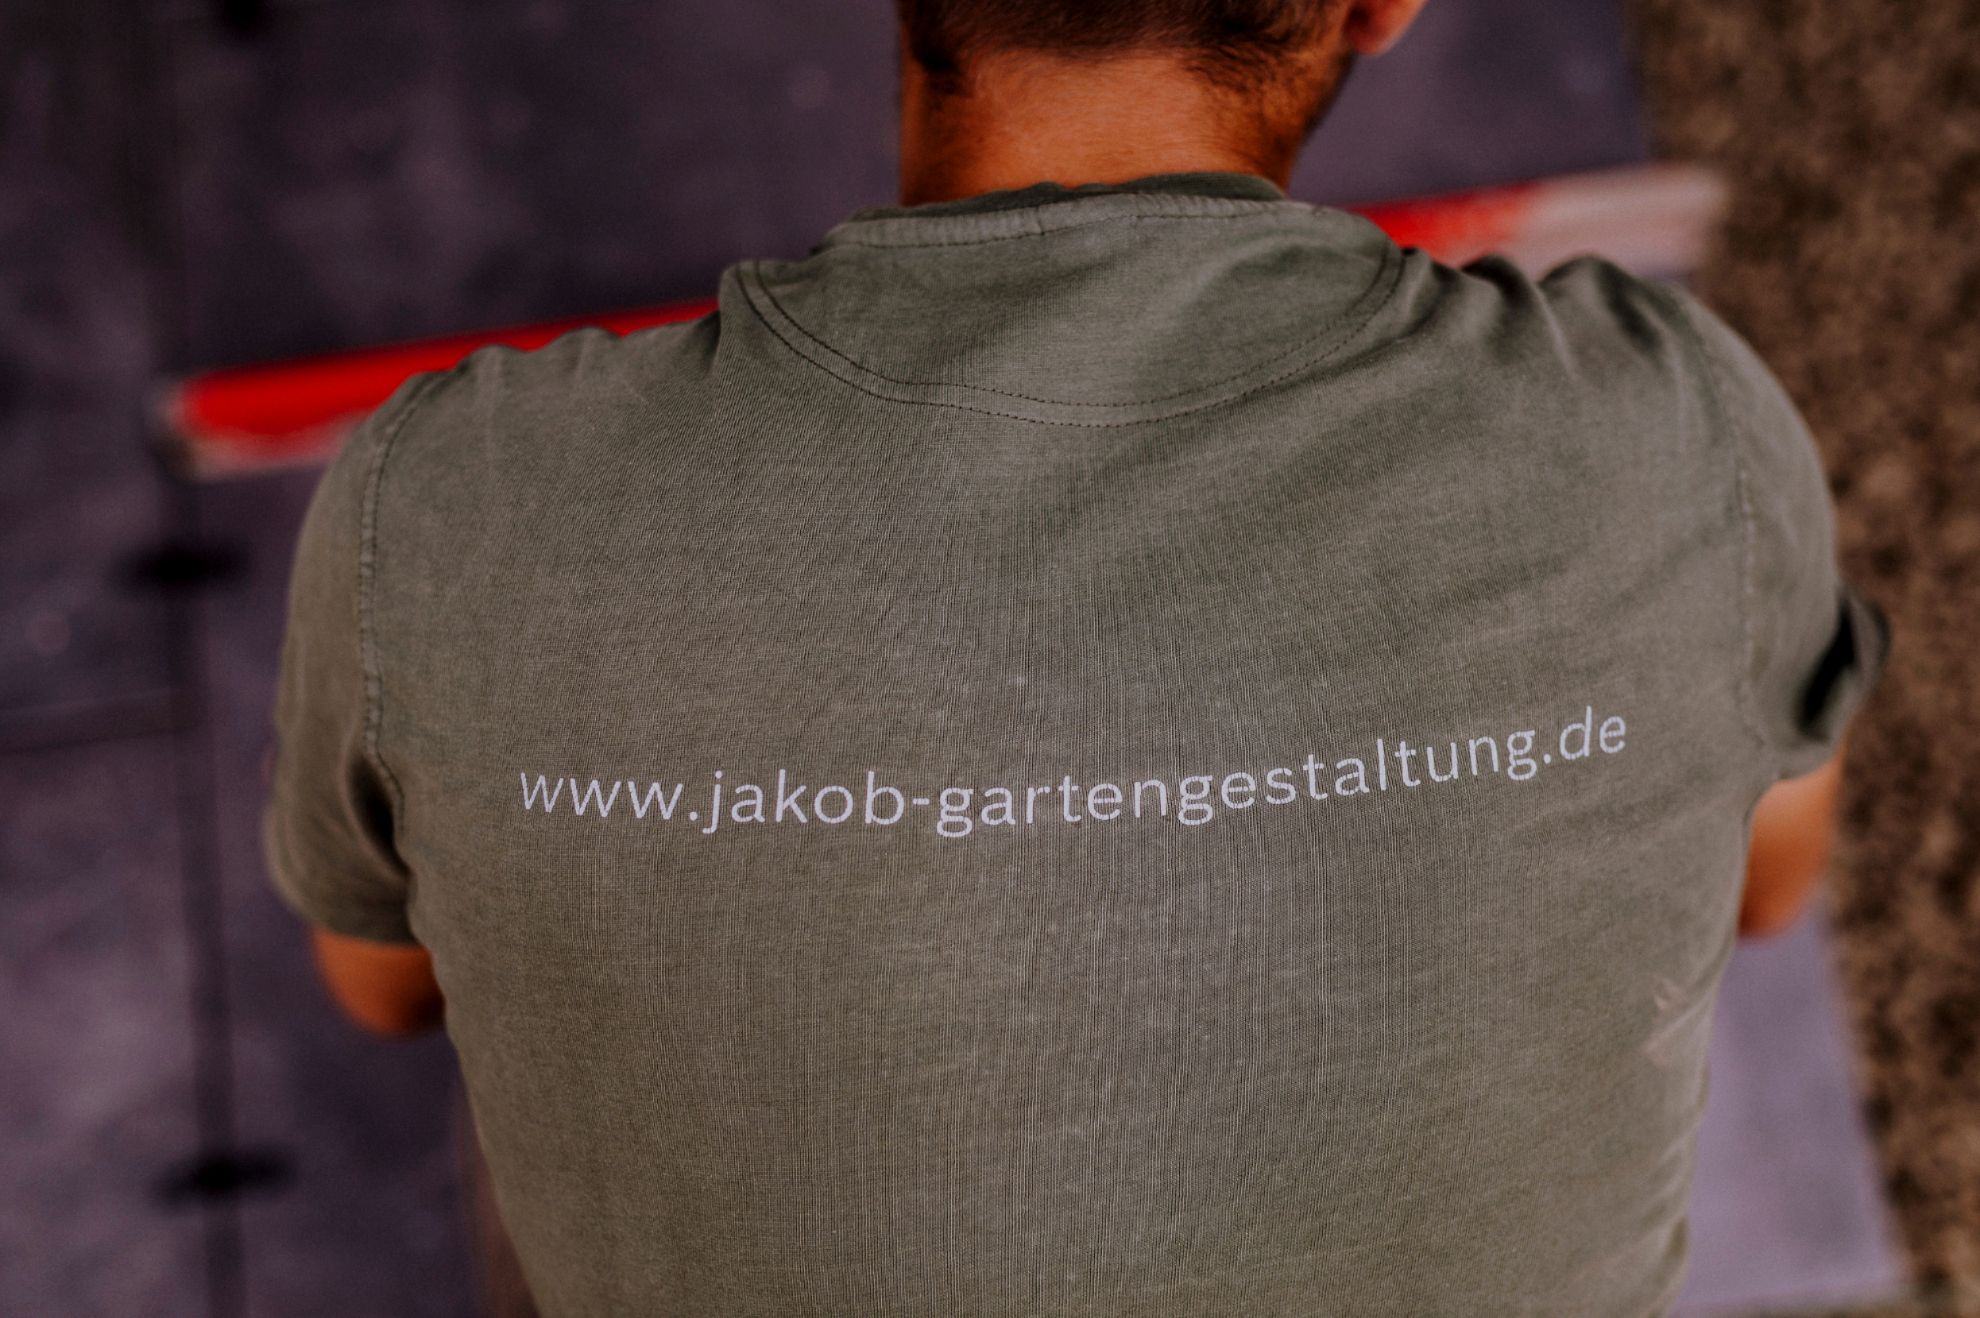 Sebastian Jakob Baumpflege und Gartengestaltung